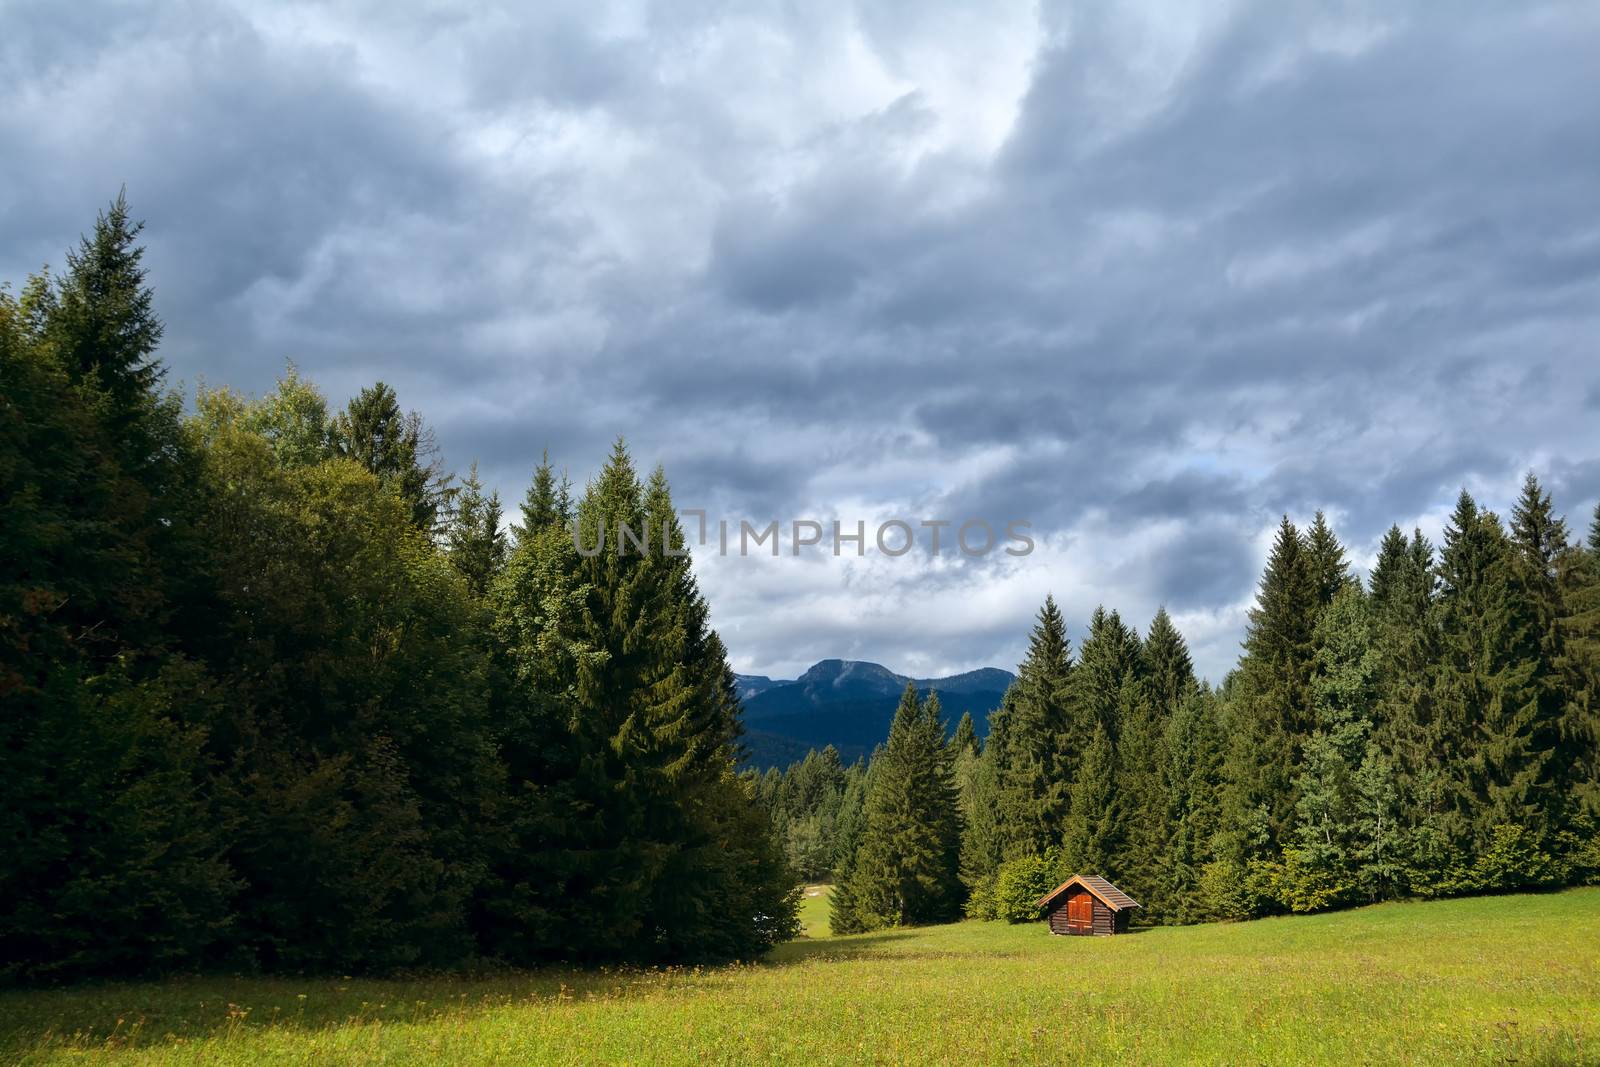 little hut on meadow in coniferous alpine forest by catolla